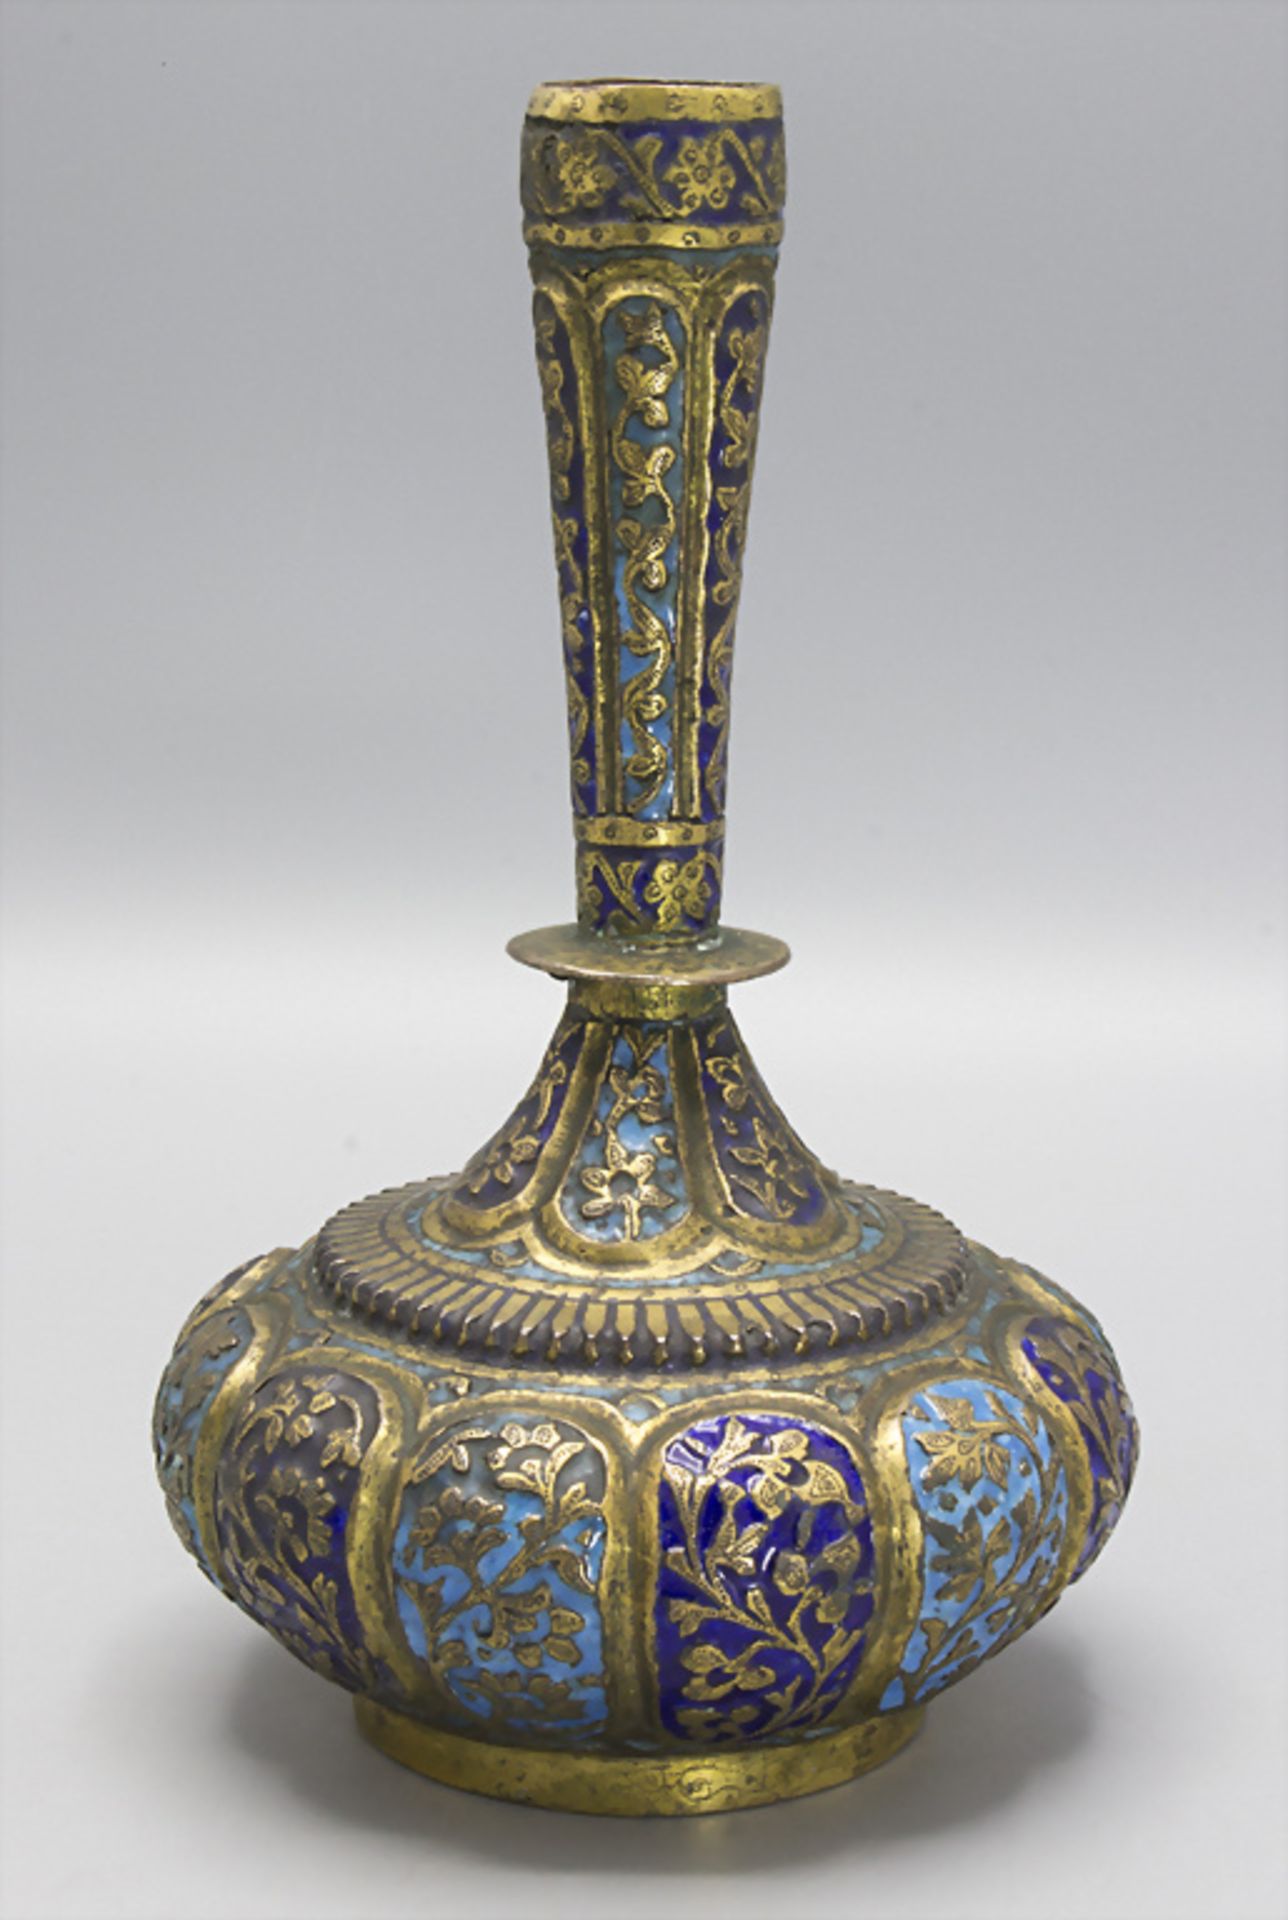 Ziervase / A decorative vase, Persien, 18./19. Jh.